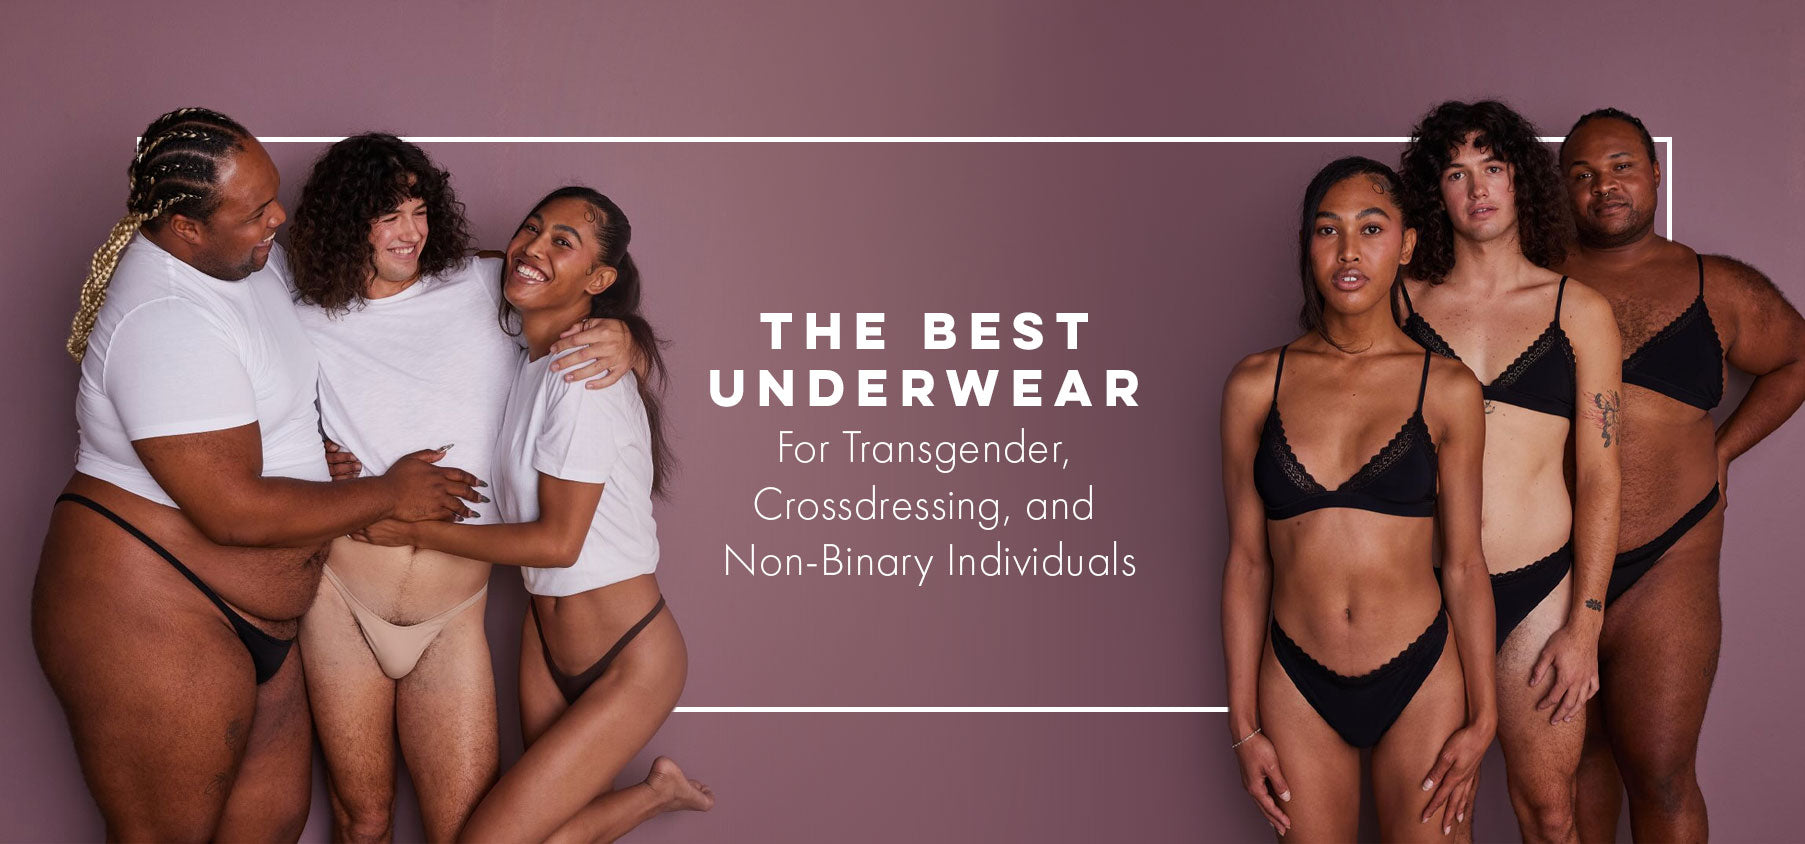 Models wearing gender inclusive underwear